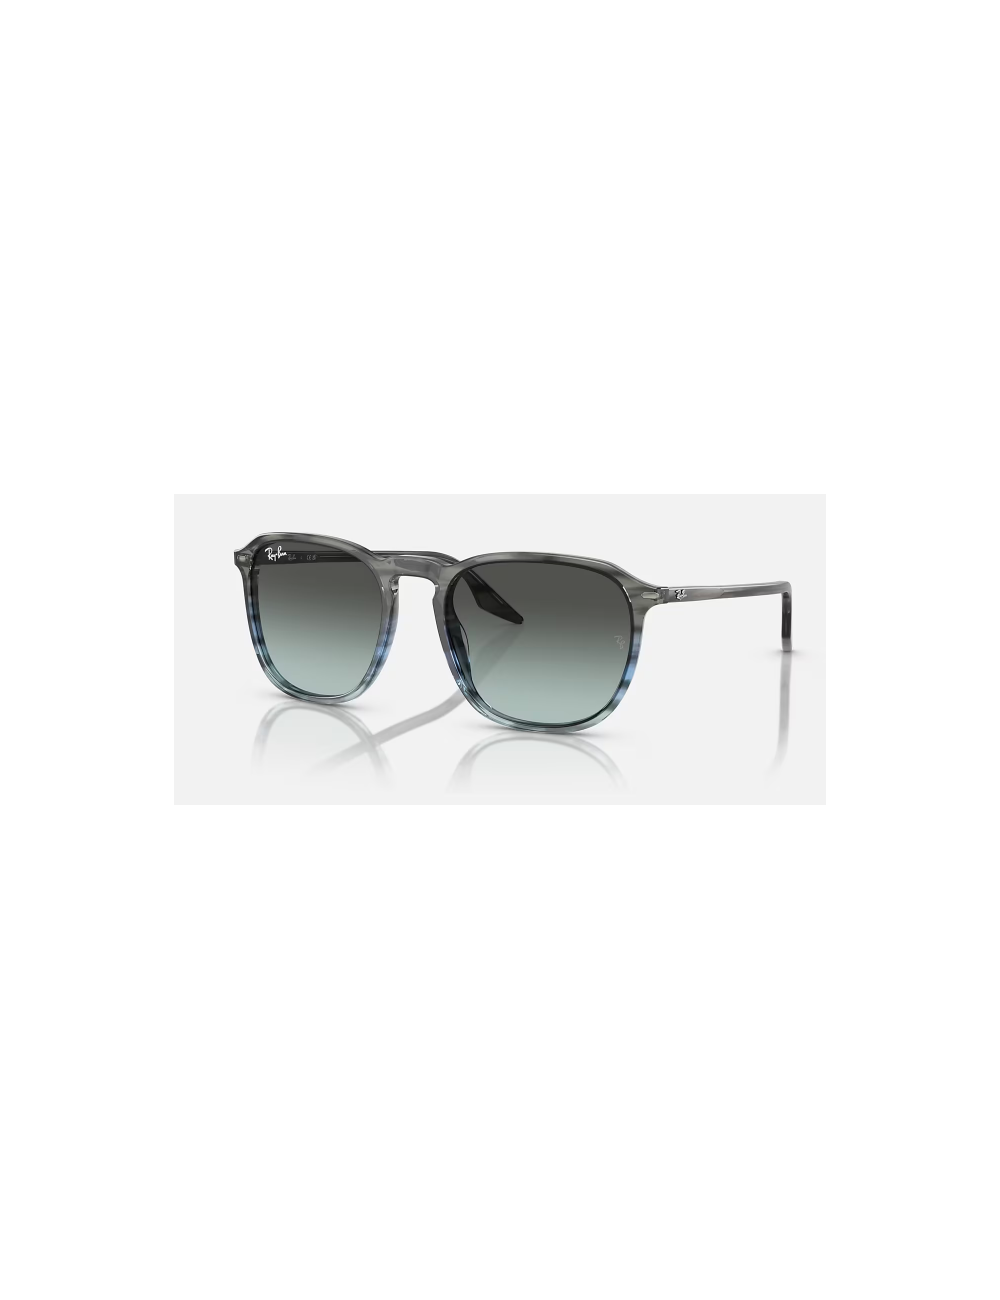 https://www.otticamauro.biz/41883-large_default/ray-ban-rb2203-man-sunglasses.jpg